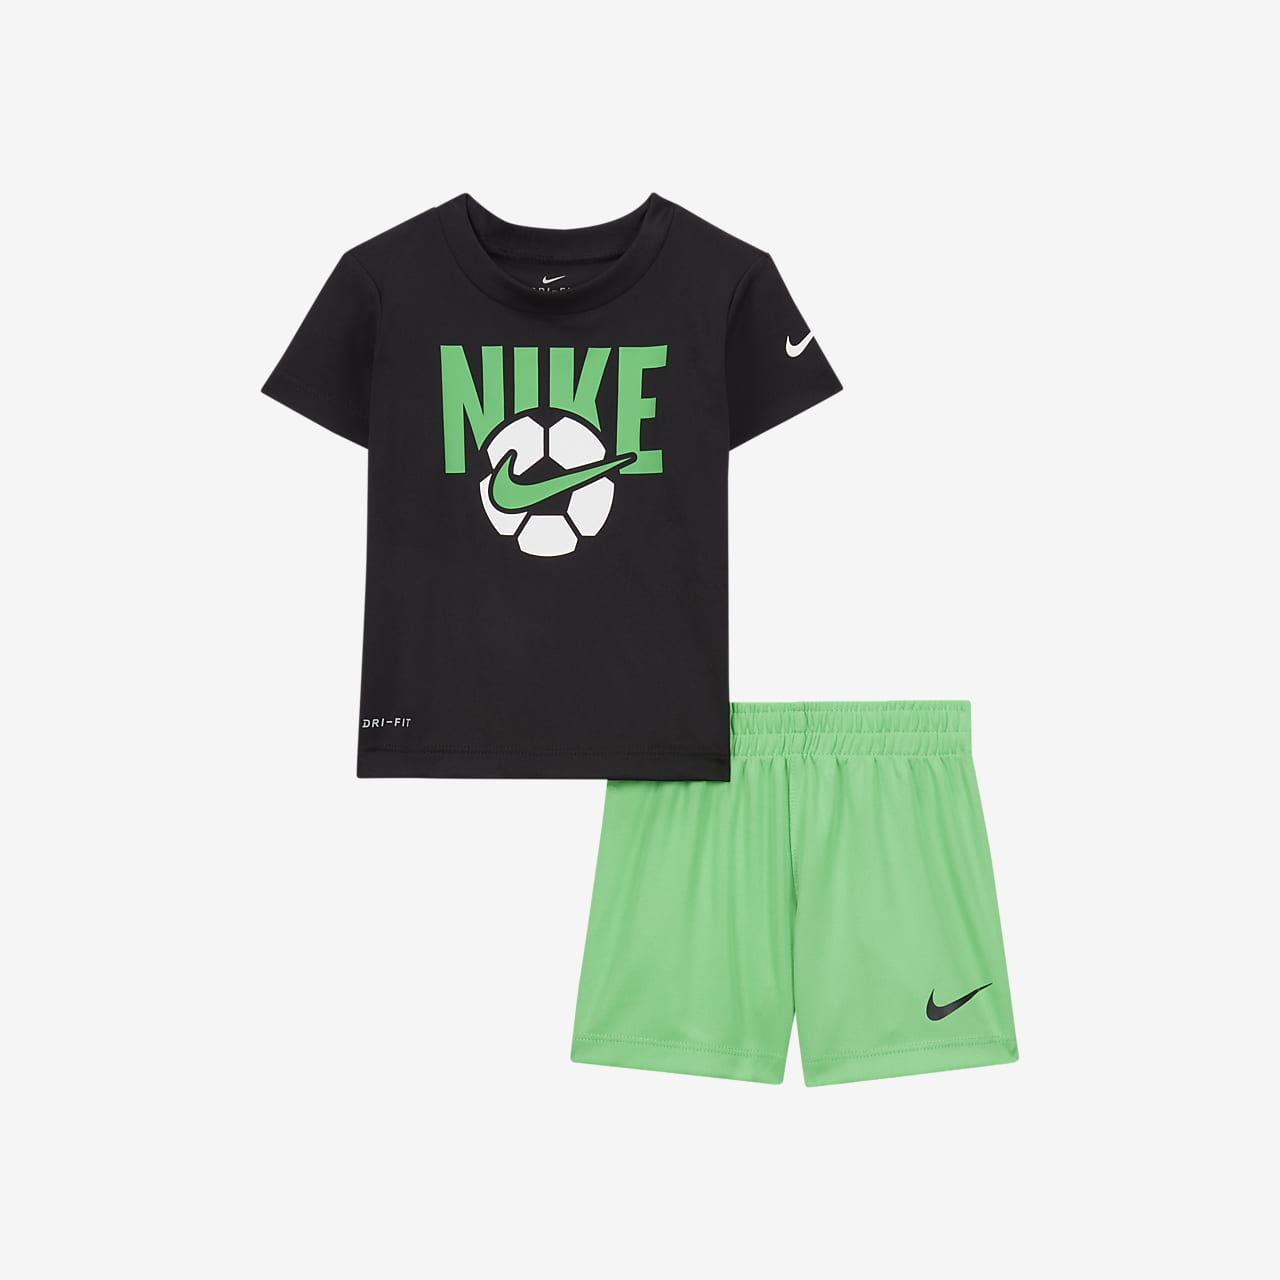 Nike Dri-FIT Baby (12-24M) Shorts Set. and T-Shirt